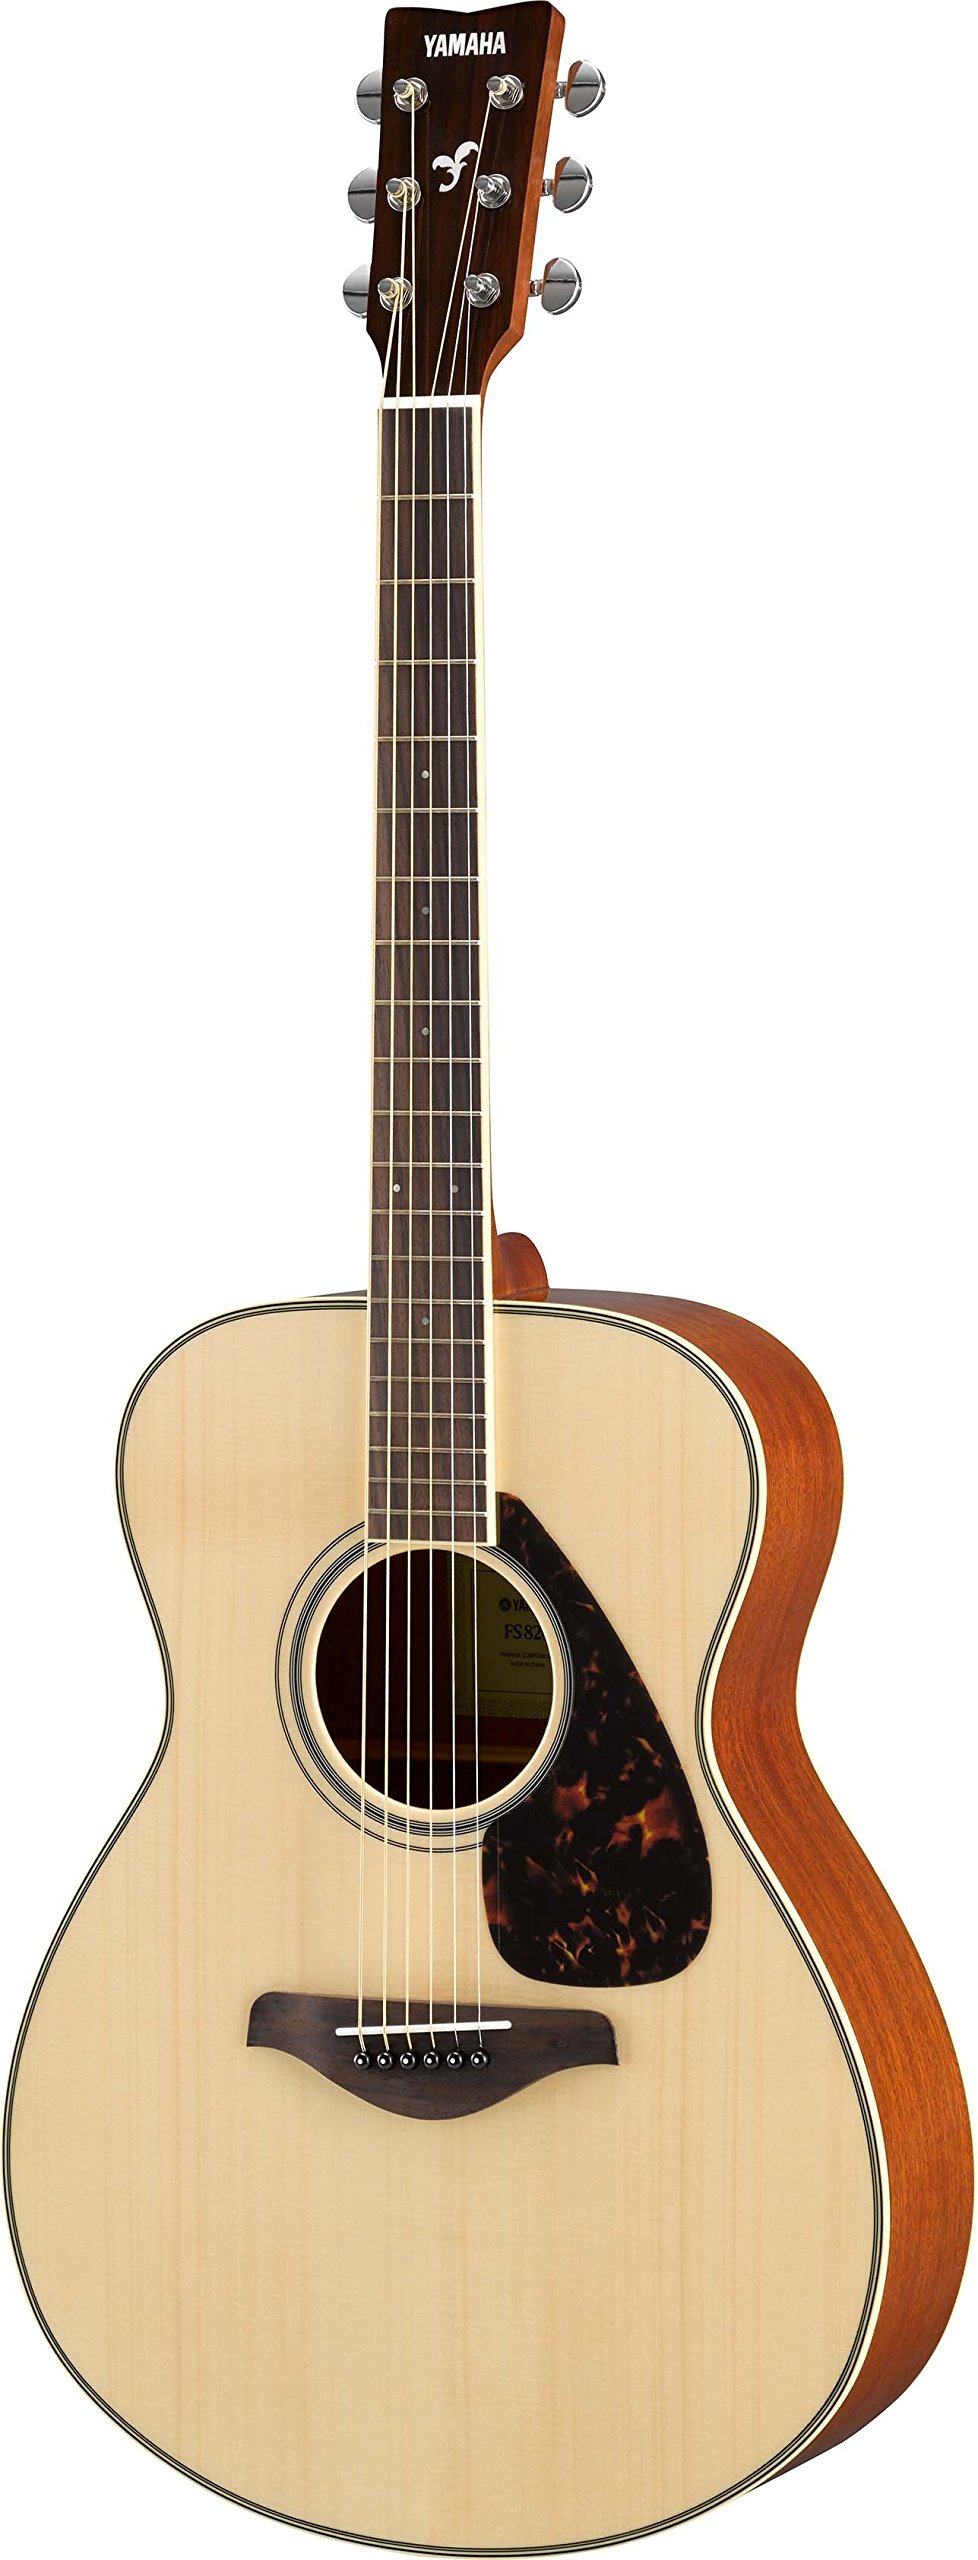 YAMAHA FG820 Solid Top Acoustic Guitar